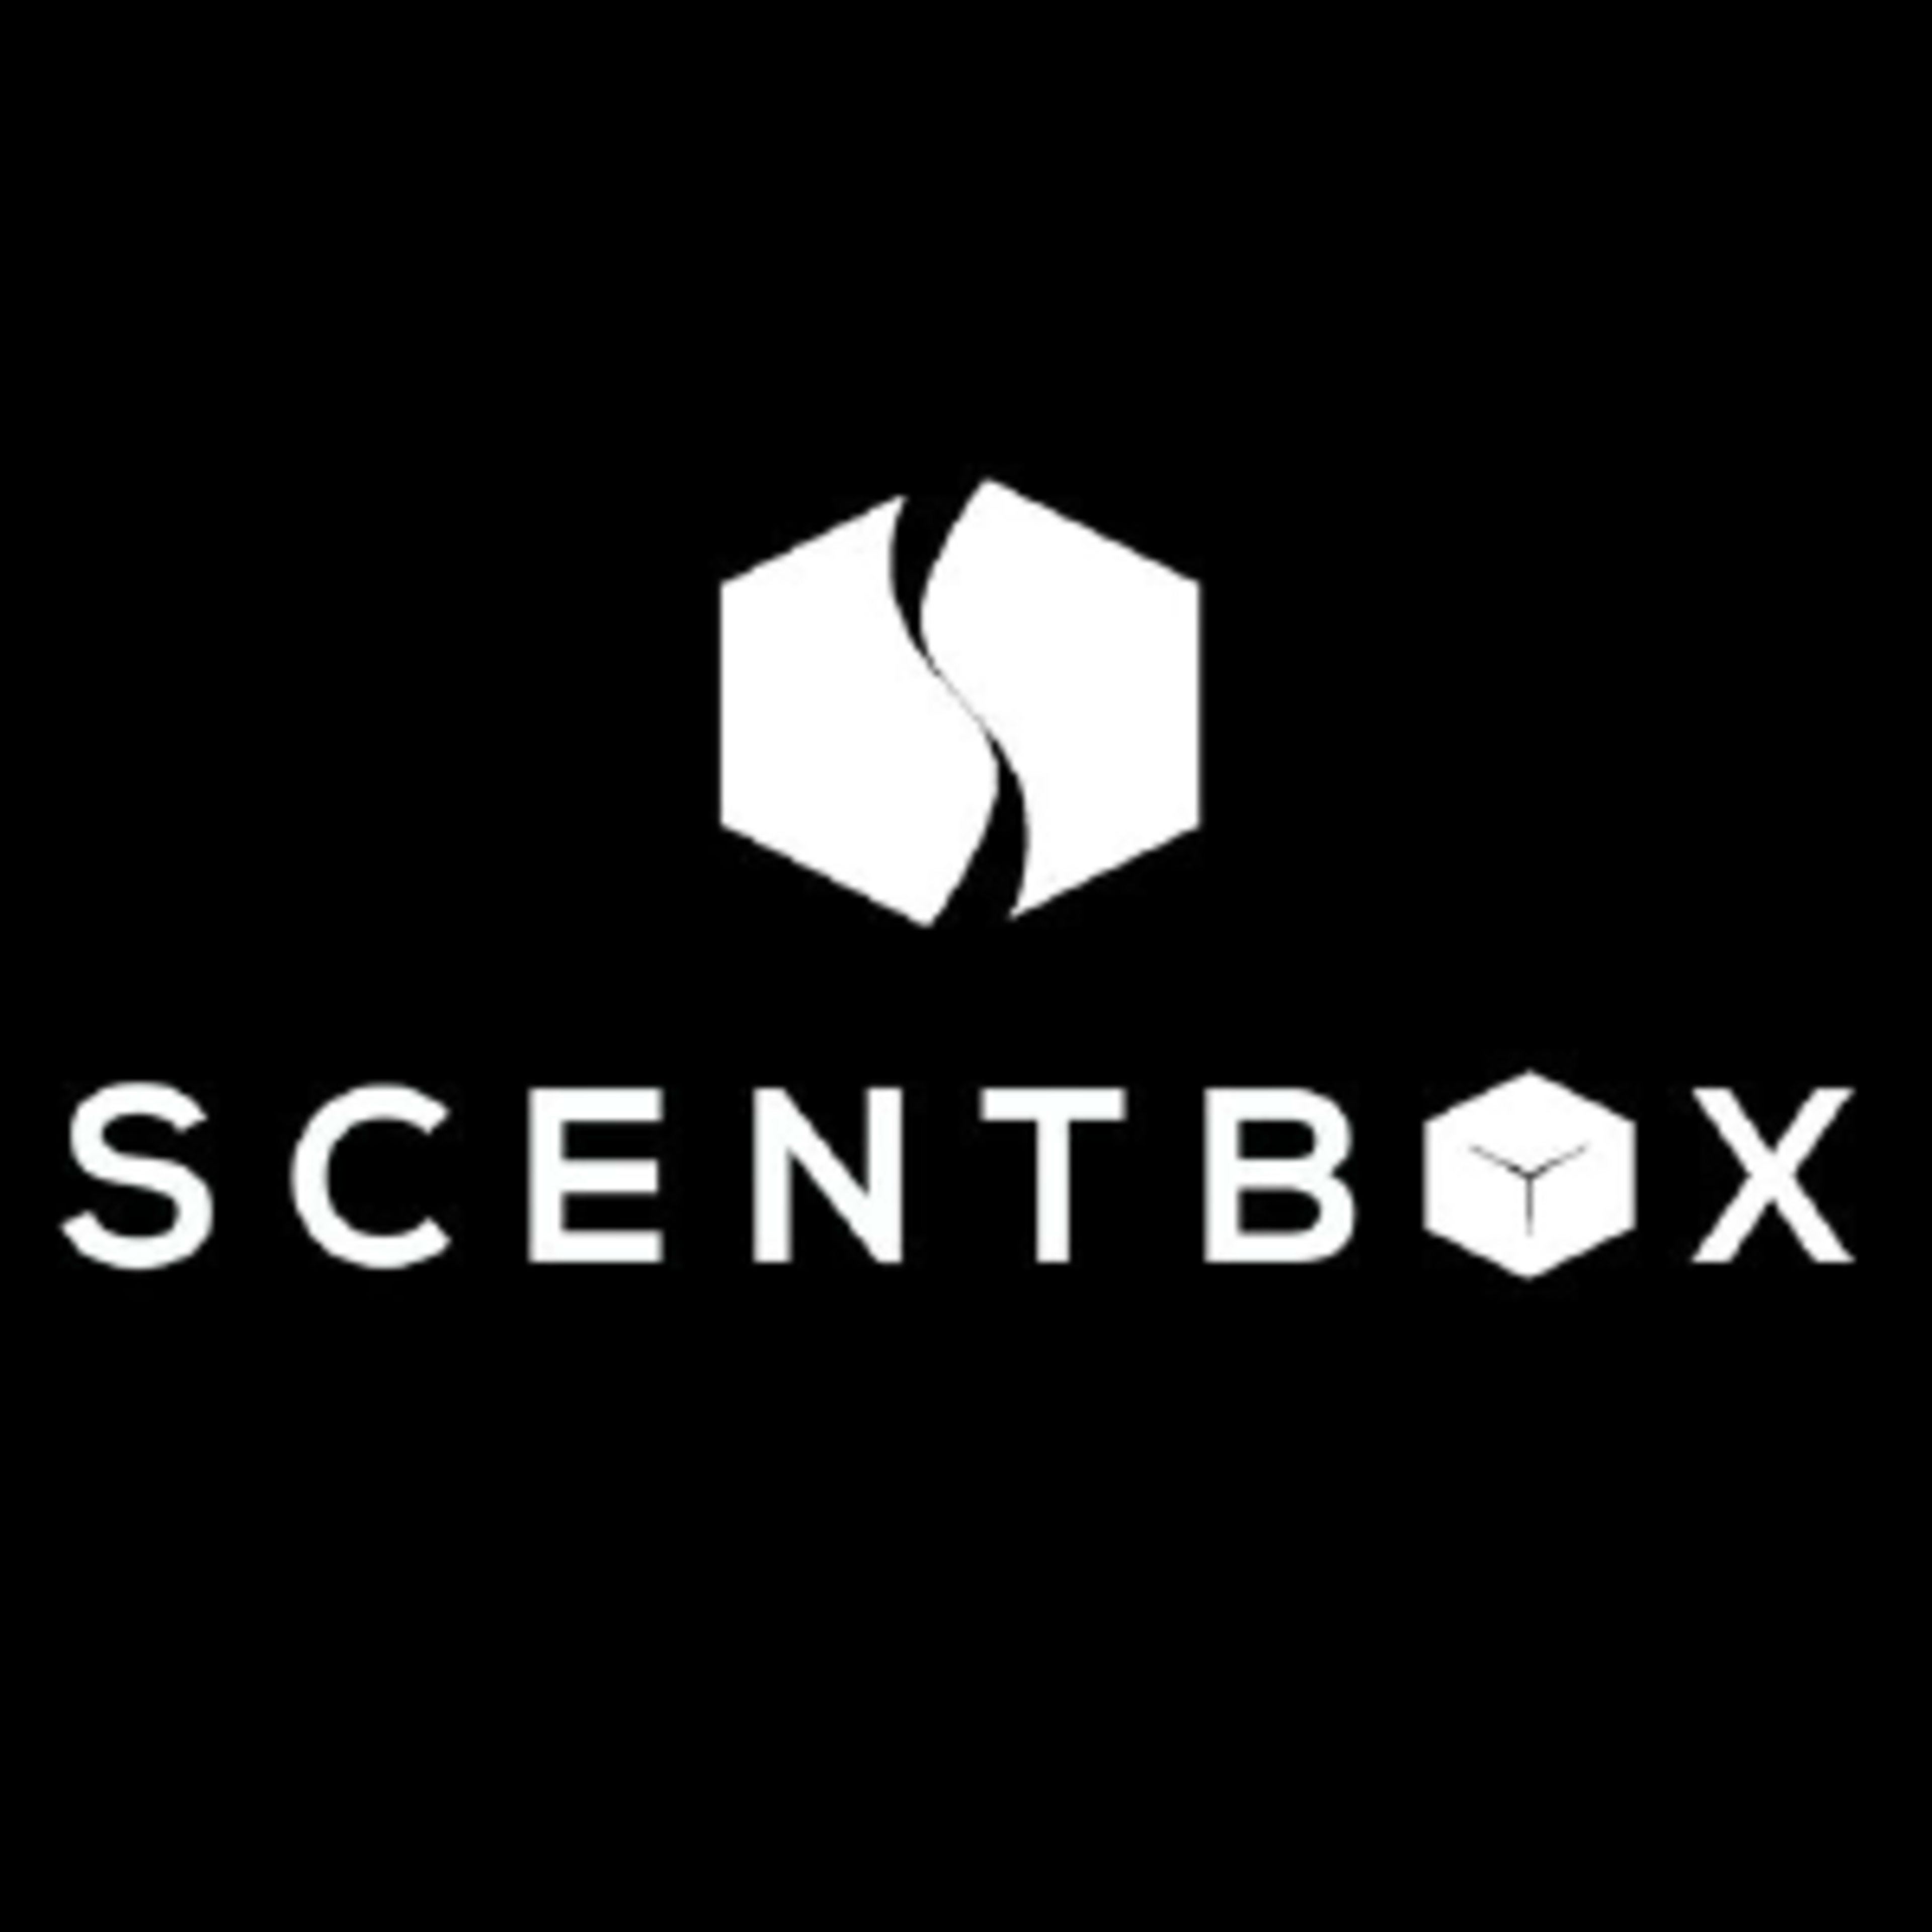 Scent BoxCode